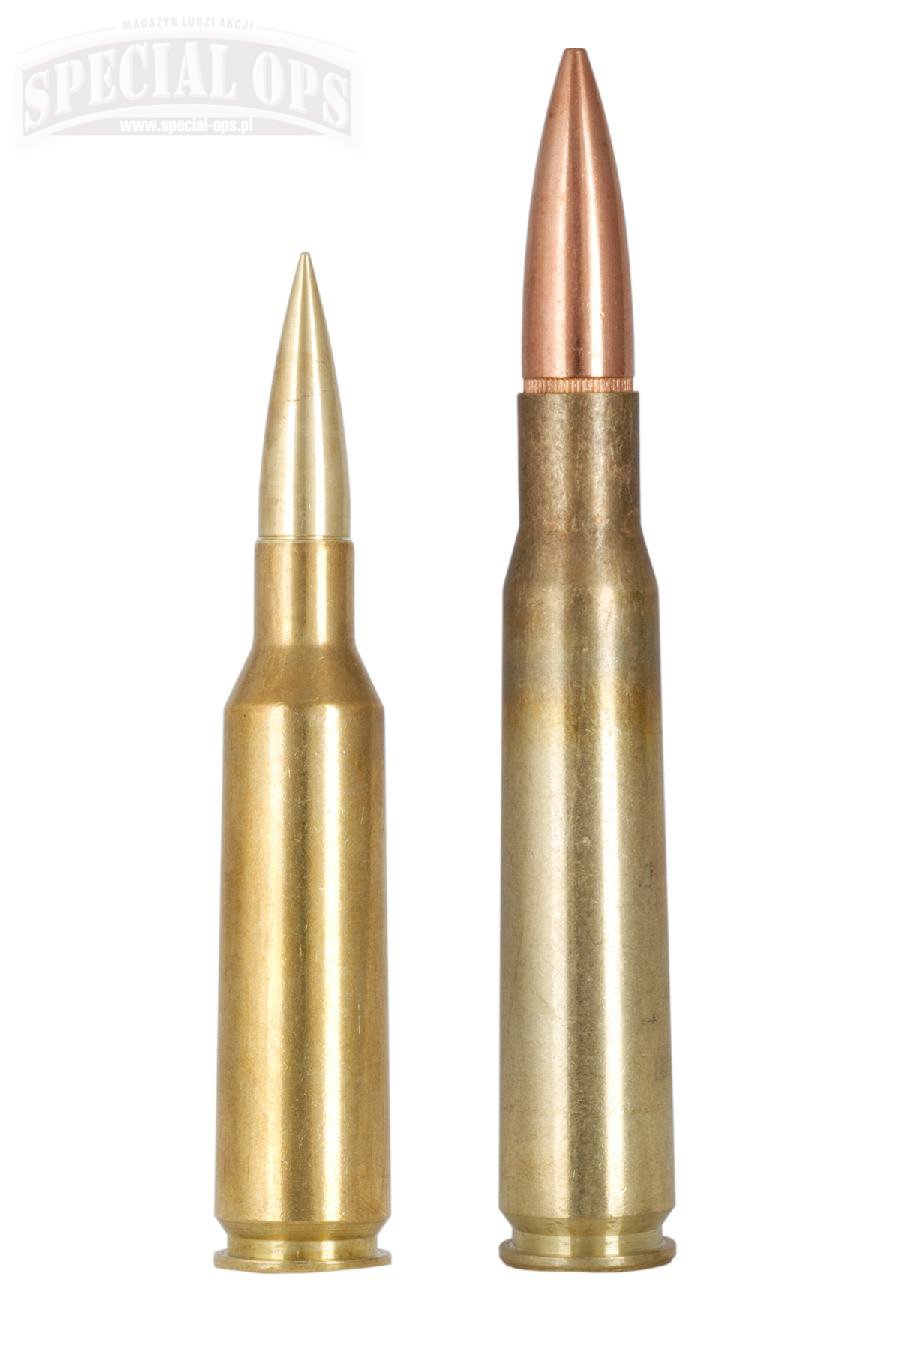 Nabój .50 Browning (BMG, 12,7 mm x 99) i nowy, mniejszy .416 Barrett  (10,6 mm x 83).